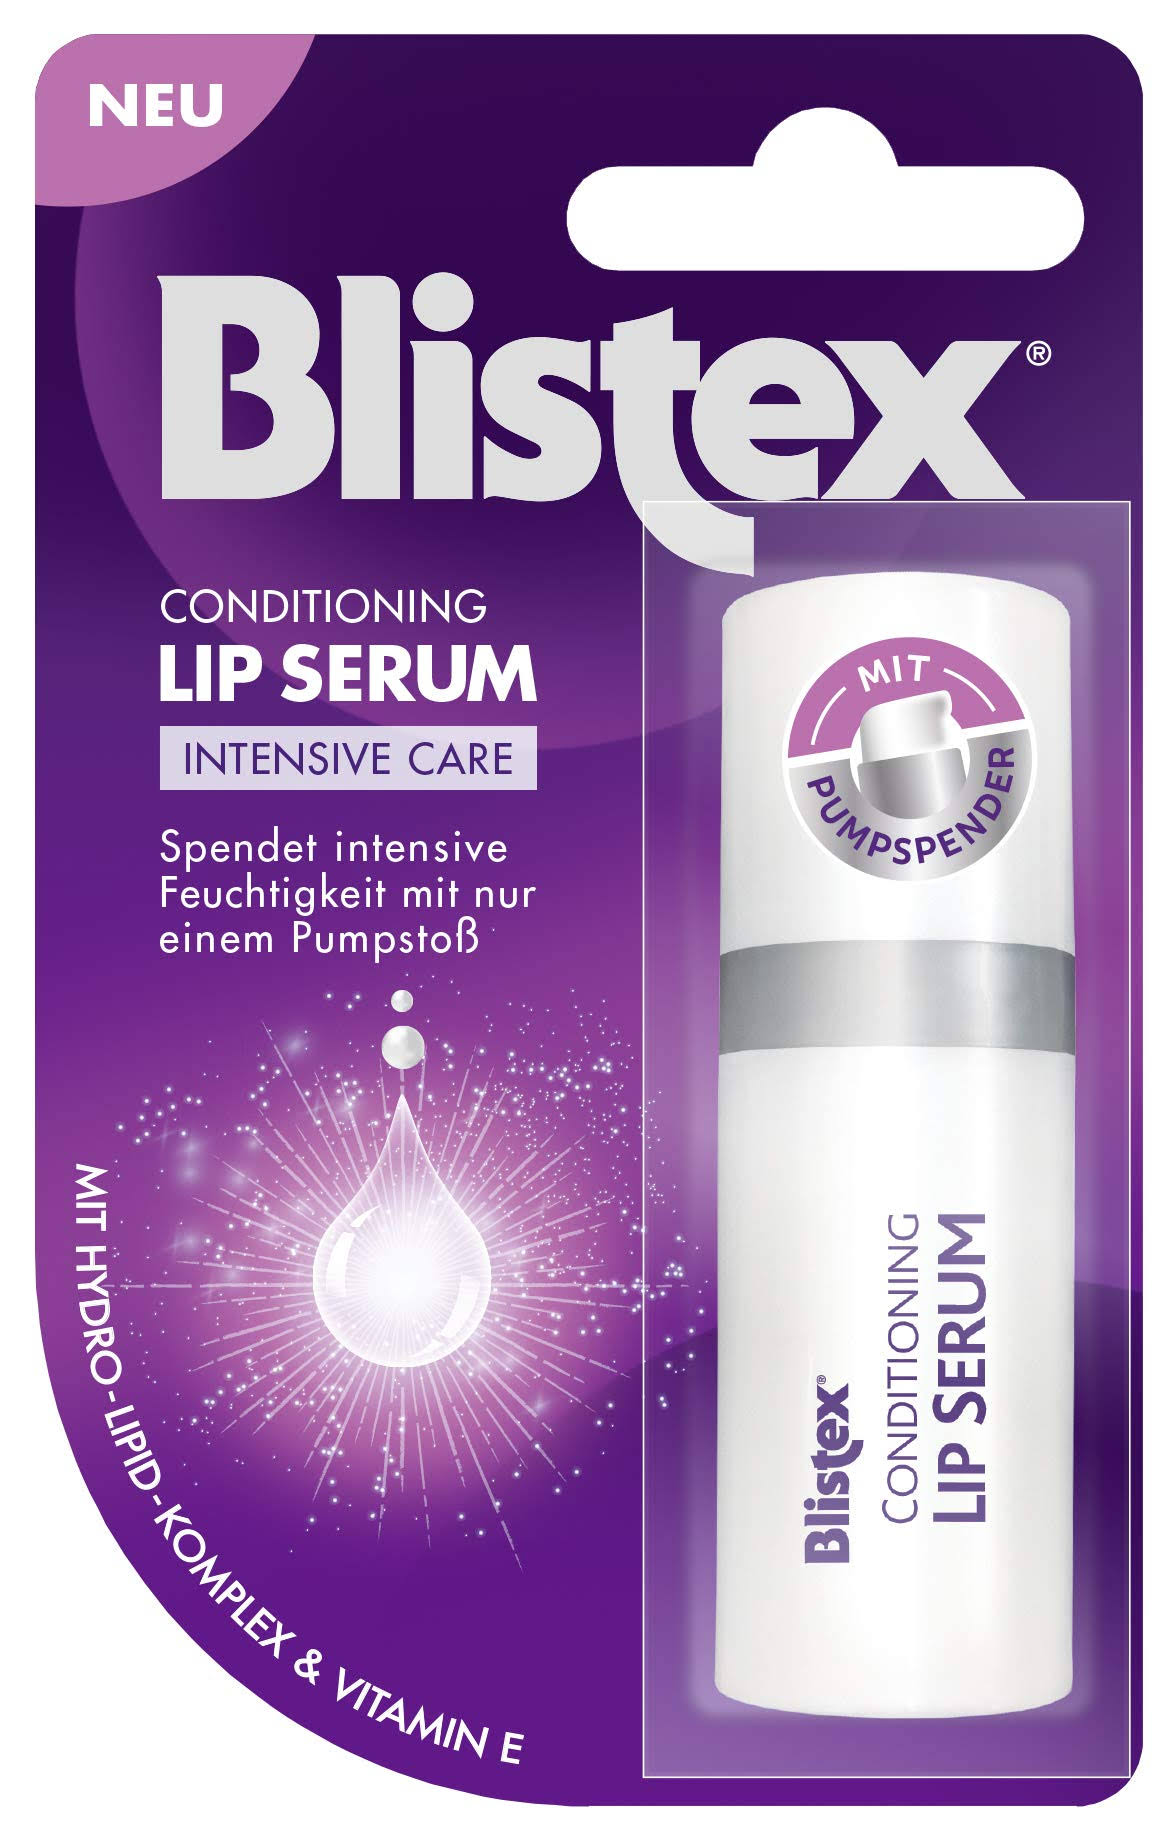 Blistex Conditioning Lip Serum Intensive Care